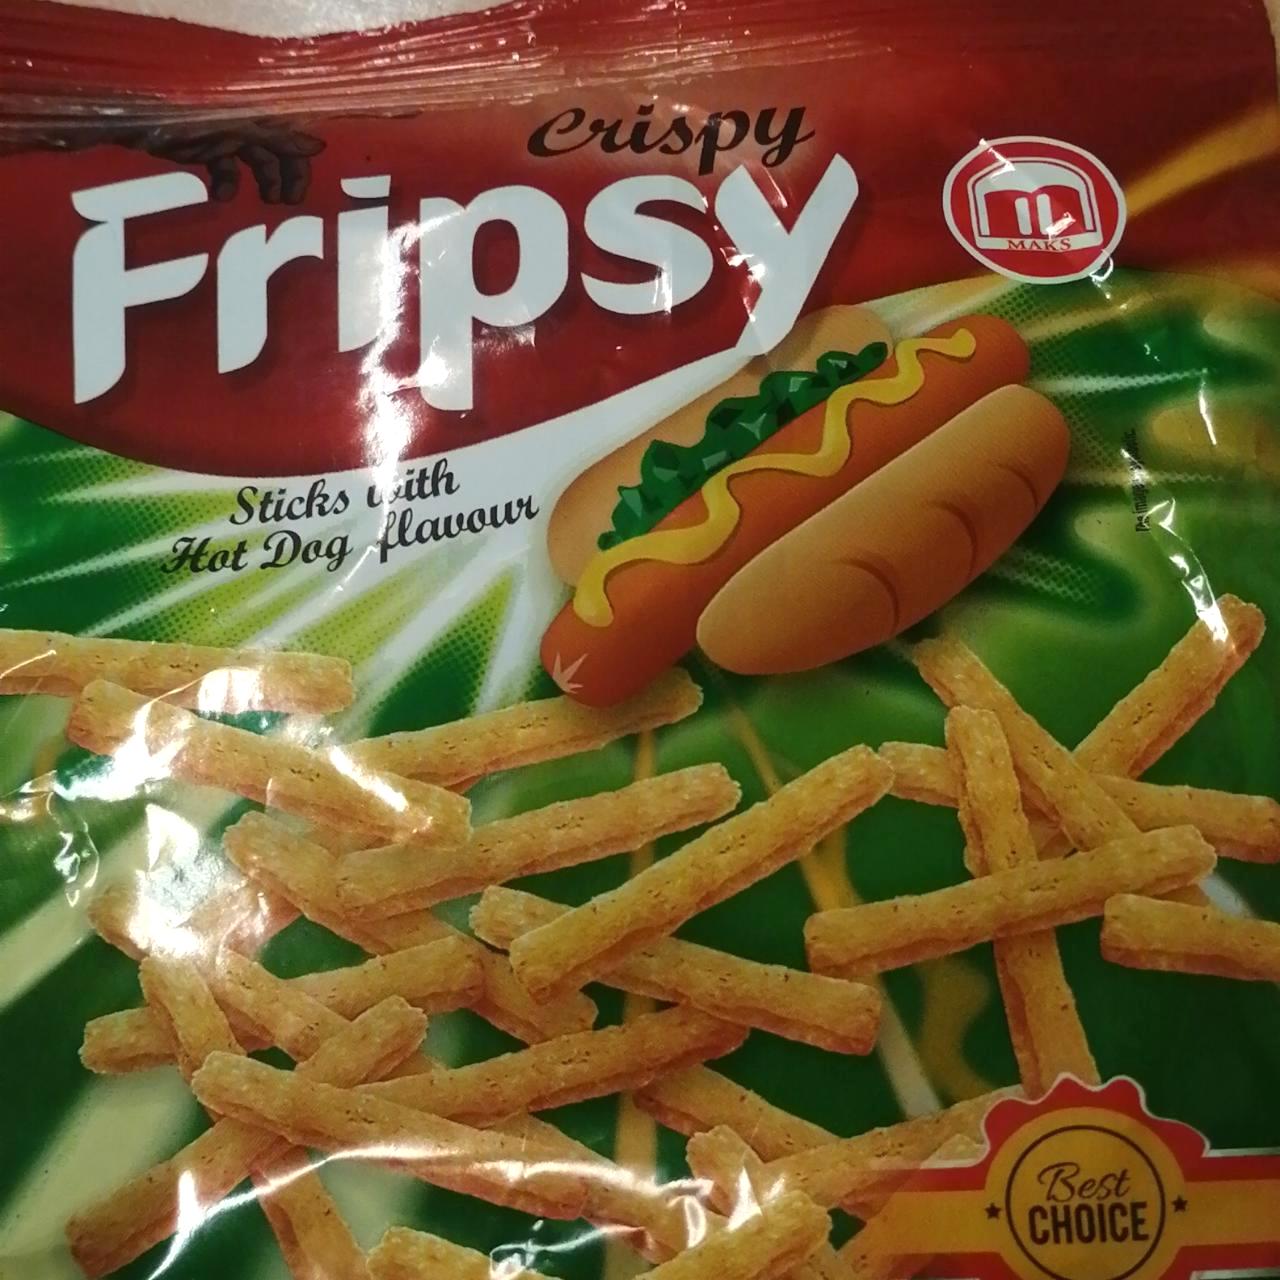 Képek - Frispy cripsy sticks with hot dog flavor